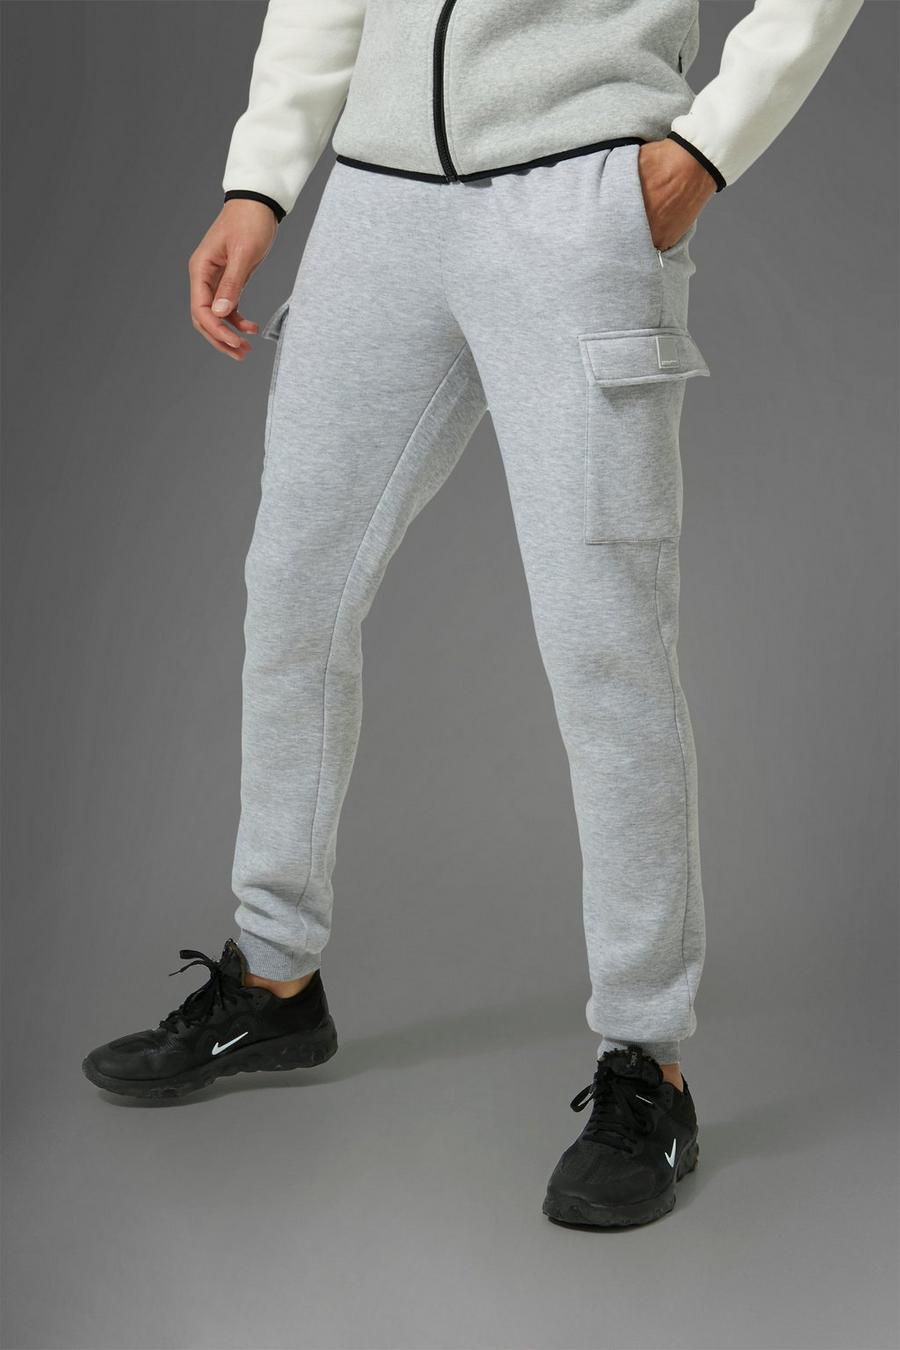 Pantaloni tuta Tall Man Active Gym stile Cargo, Grey marl grigio